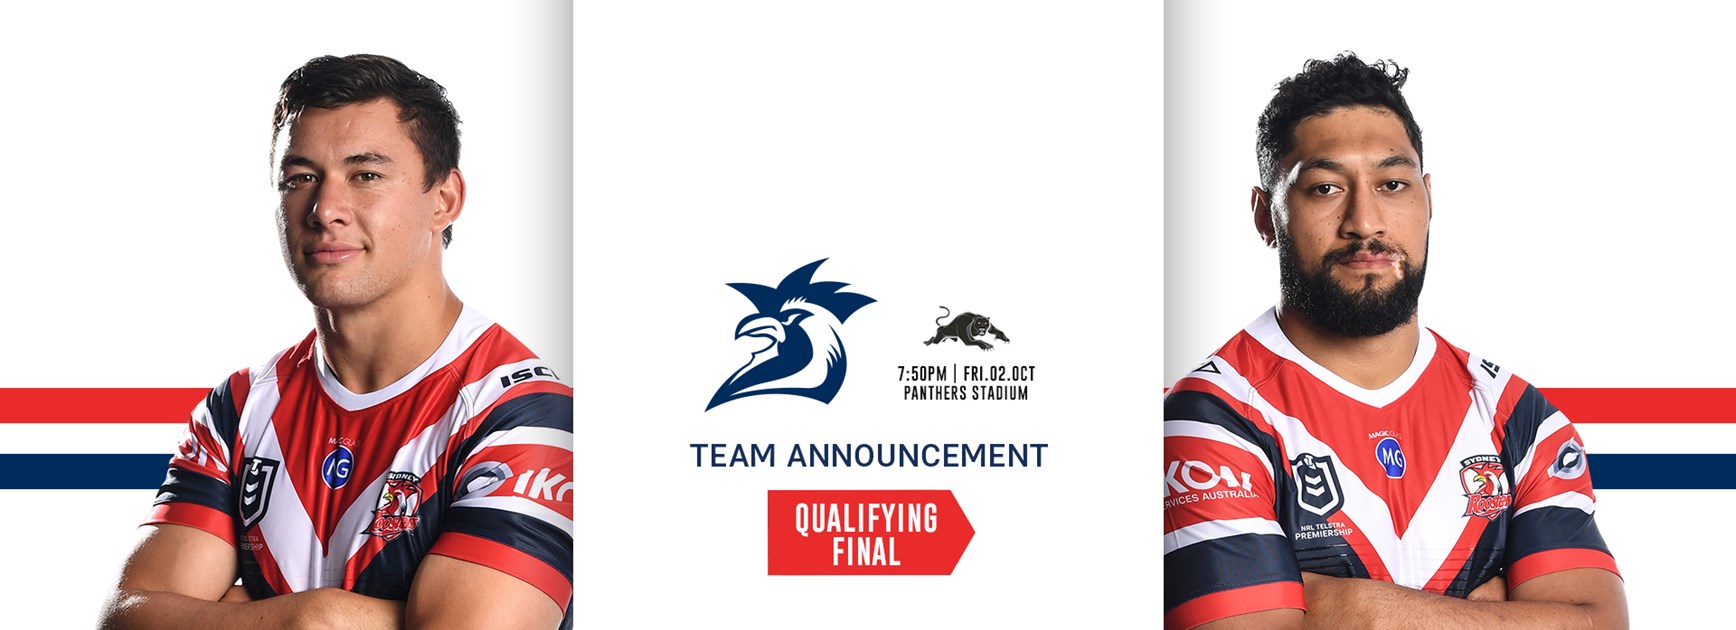 NRL Team Announcement | Qualifying Final